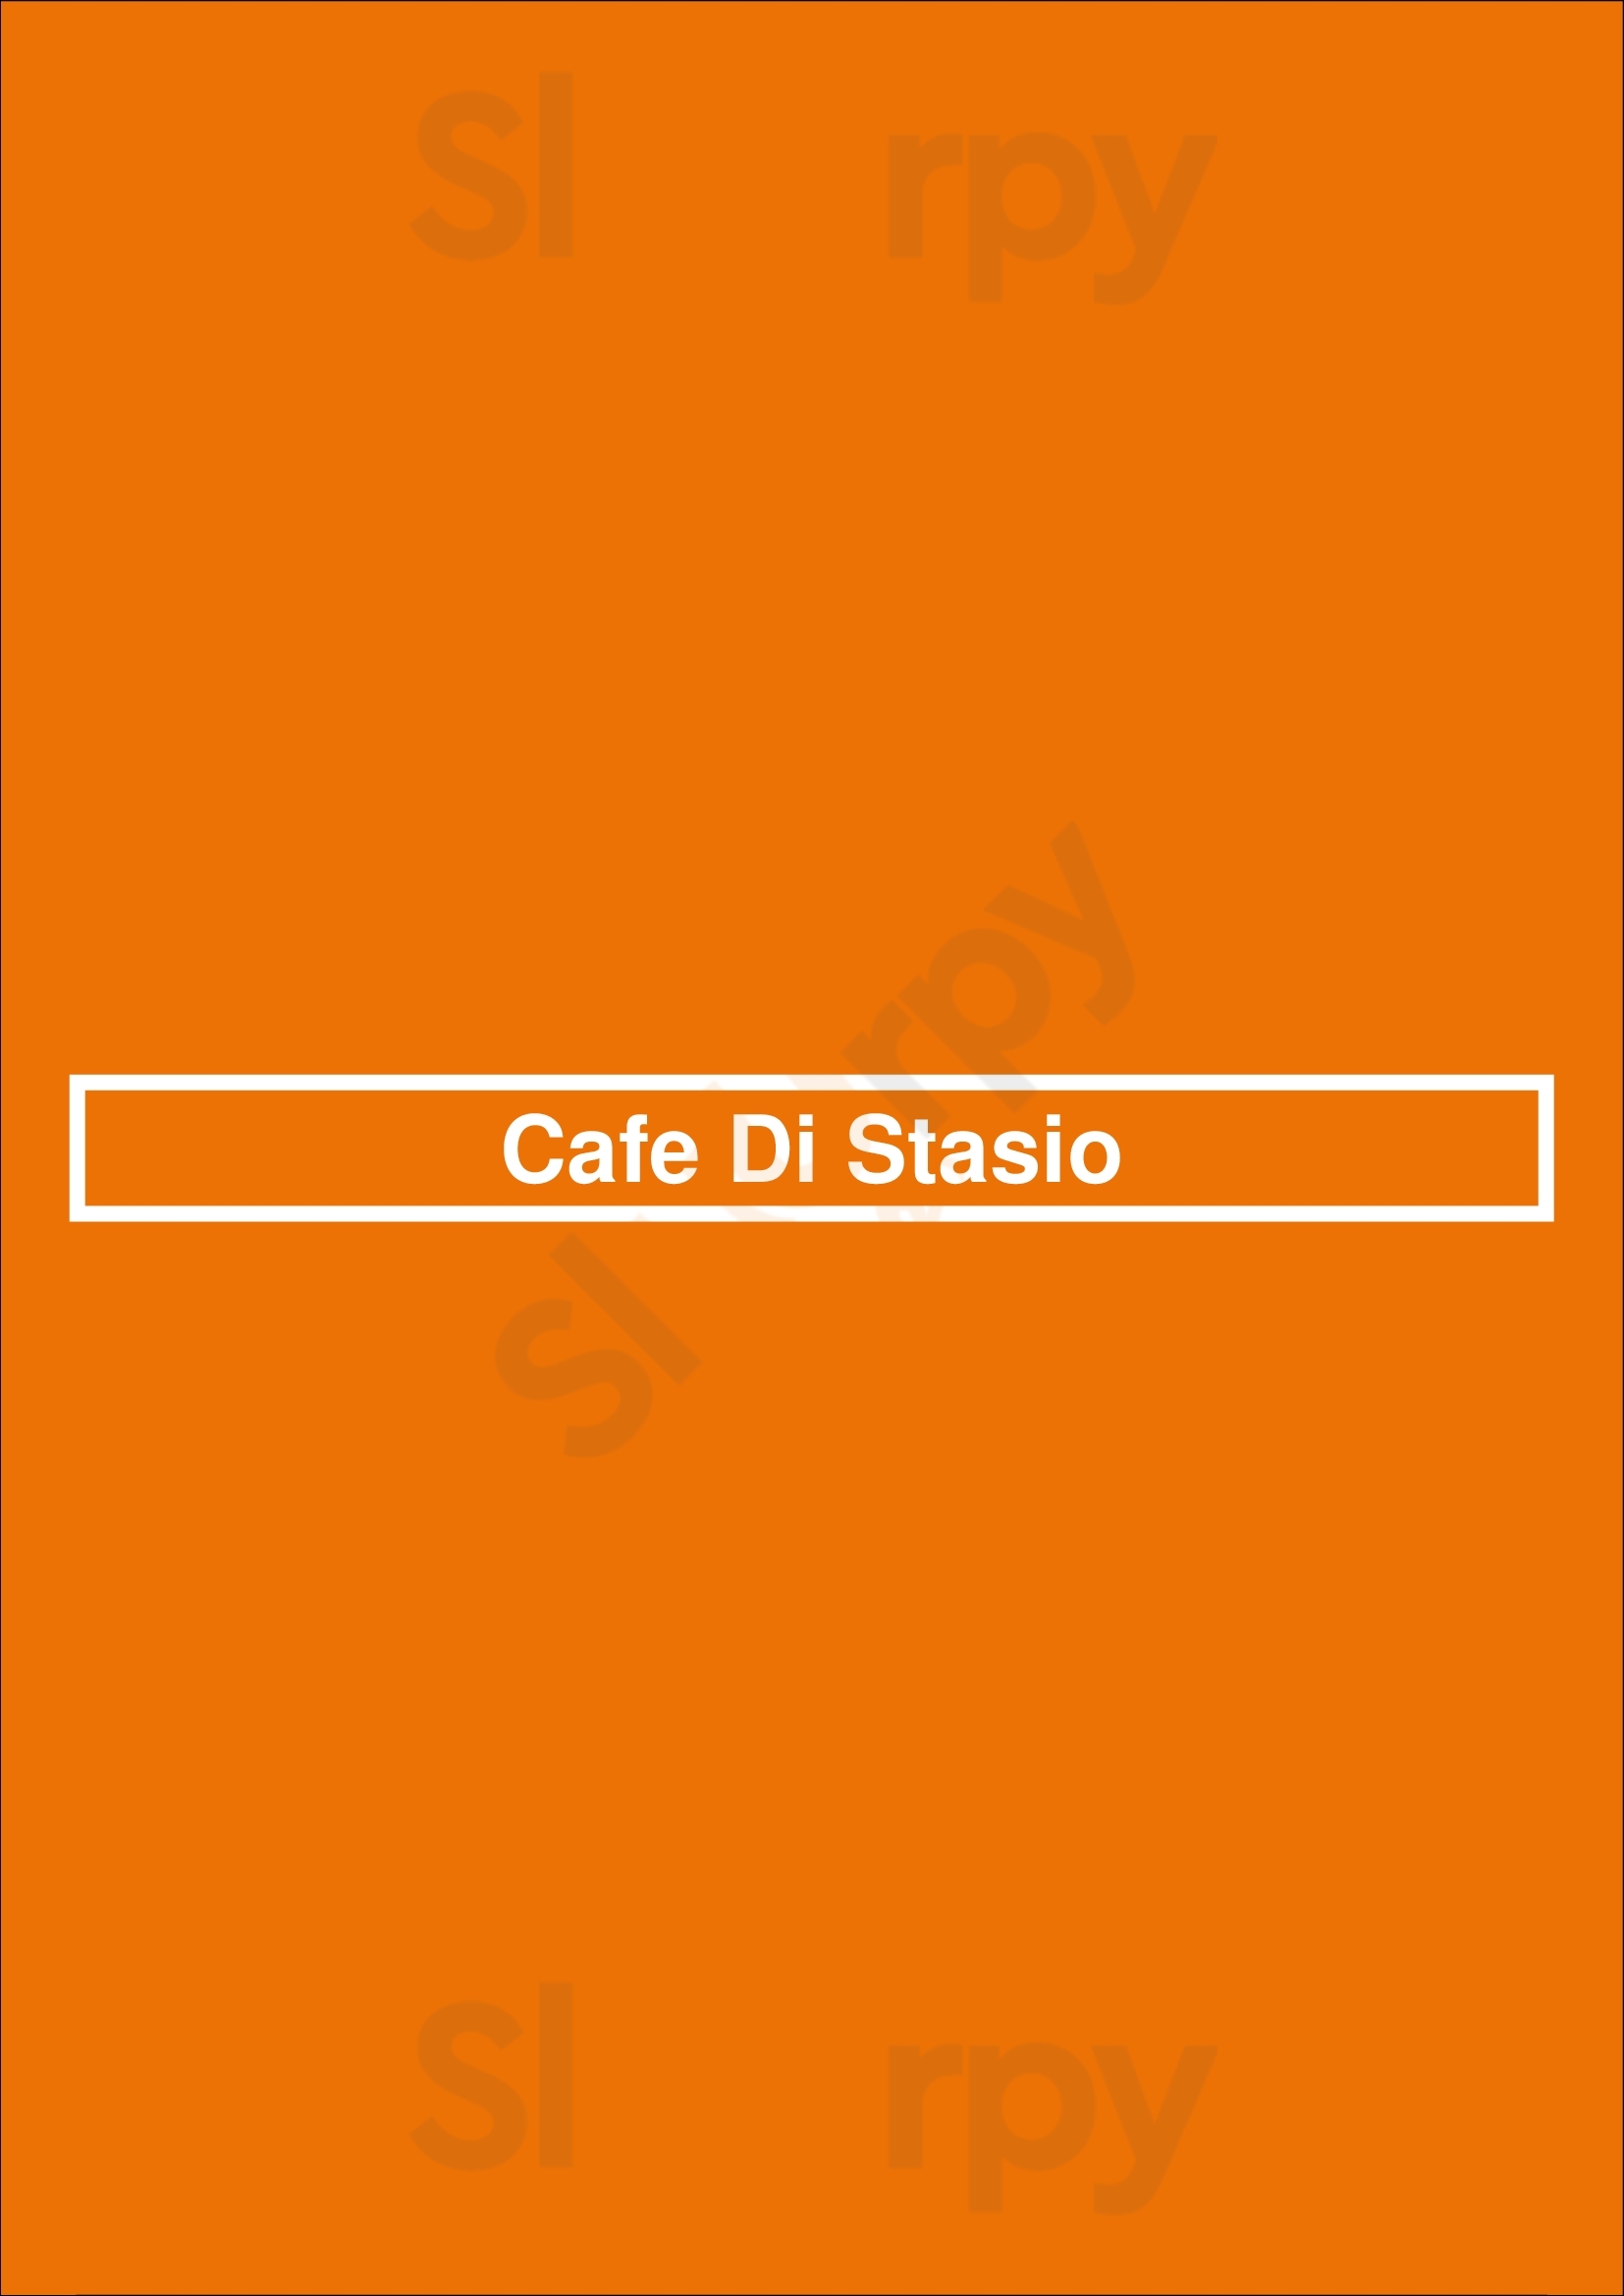 Cafe Di Stasio St Kilda Menu - 1